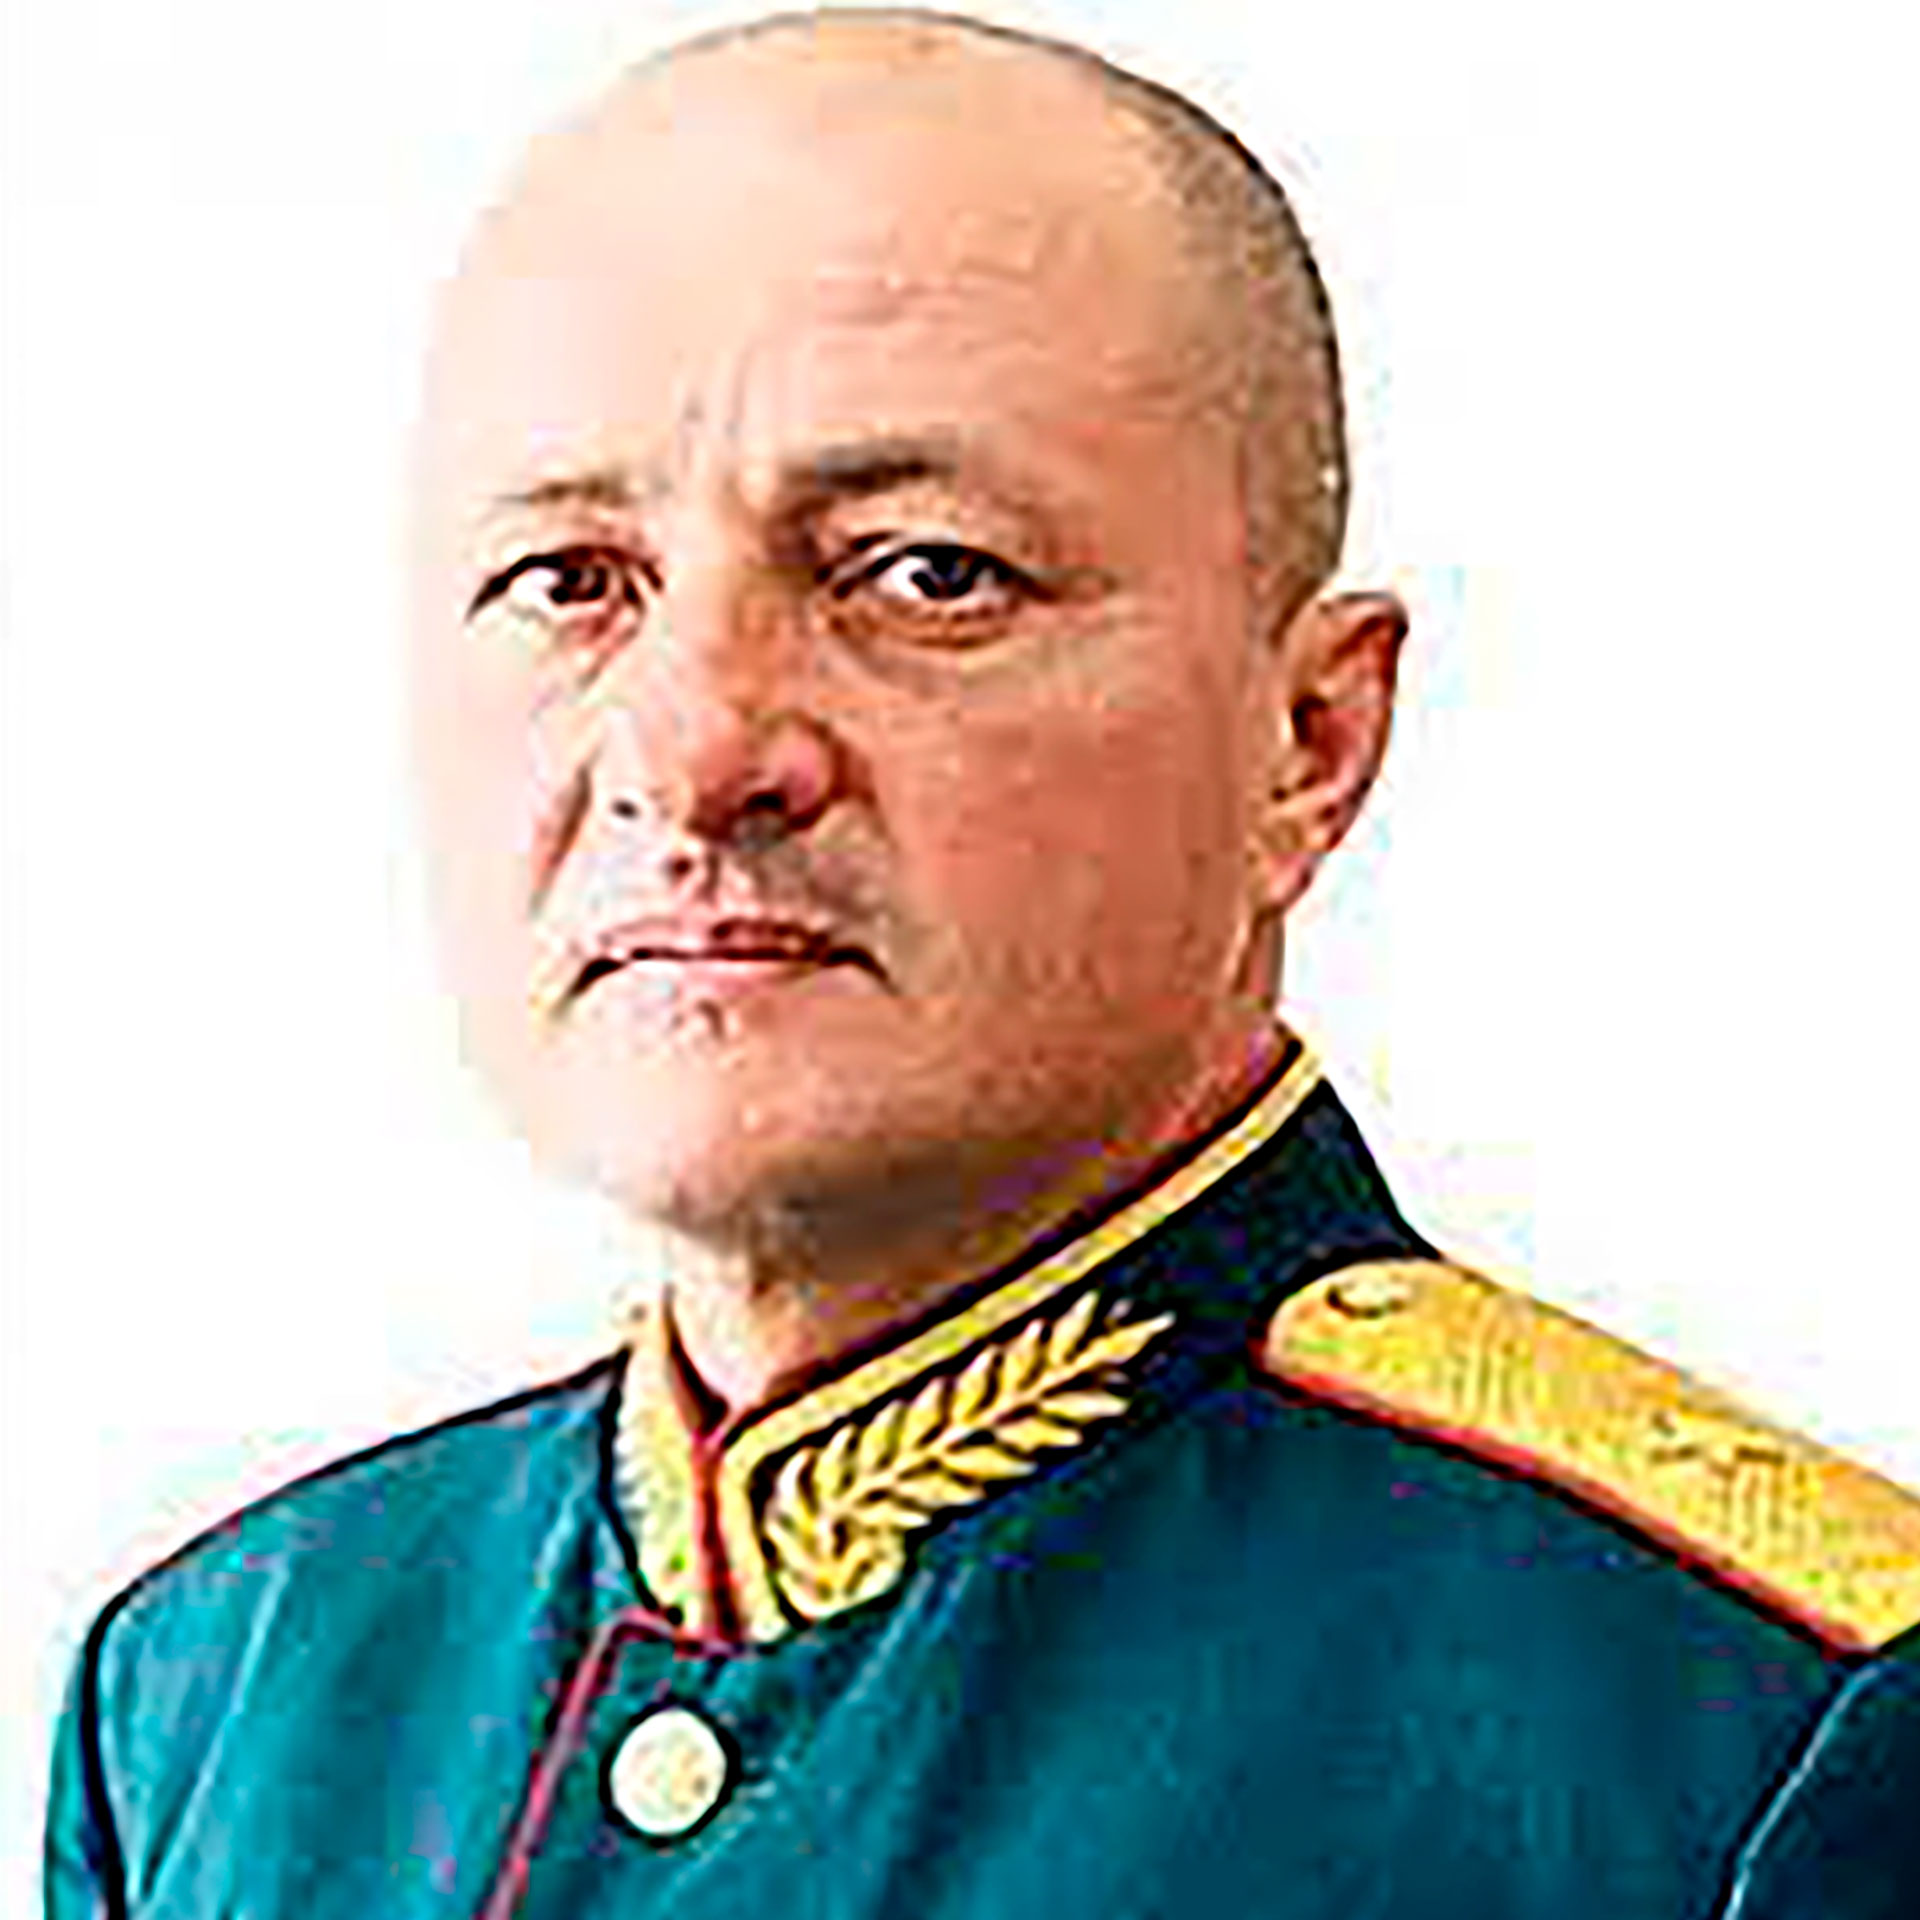 Oleg Mityaev